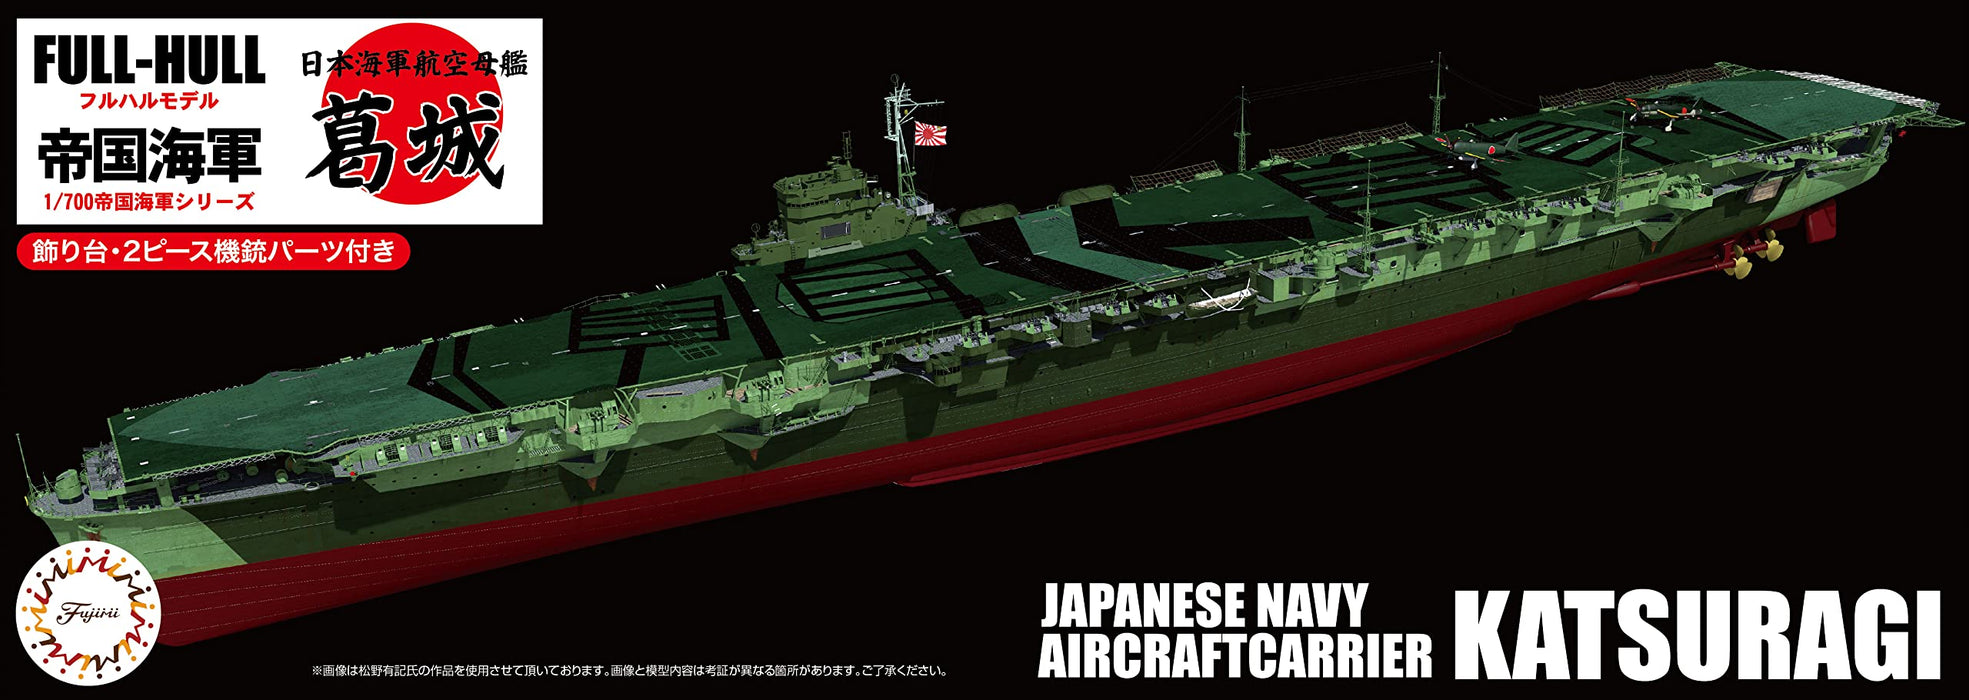 FUJIMI Full Hull 1/700 Ijn Japanese Navy Aircraft Carrier Katsuragi Plastic Model